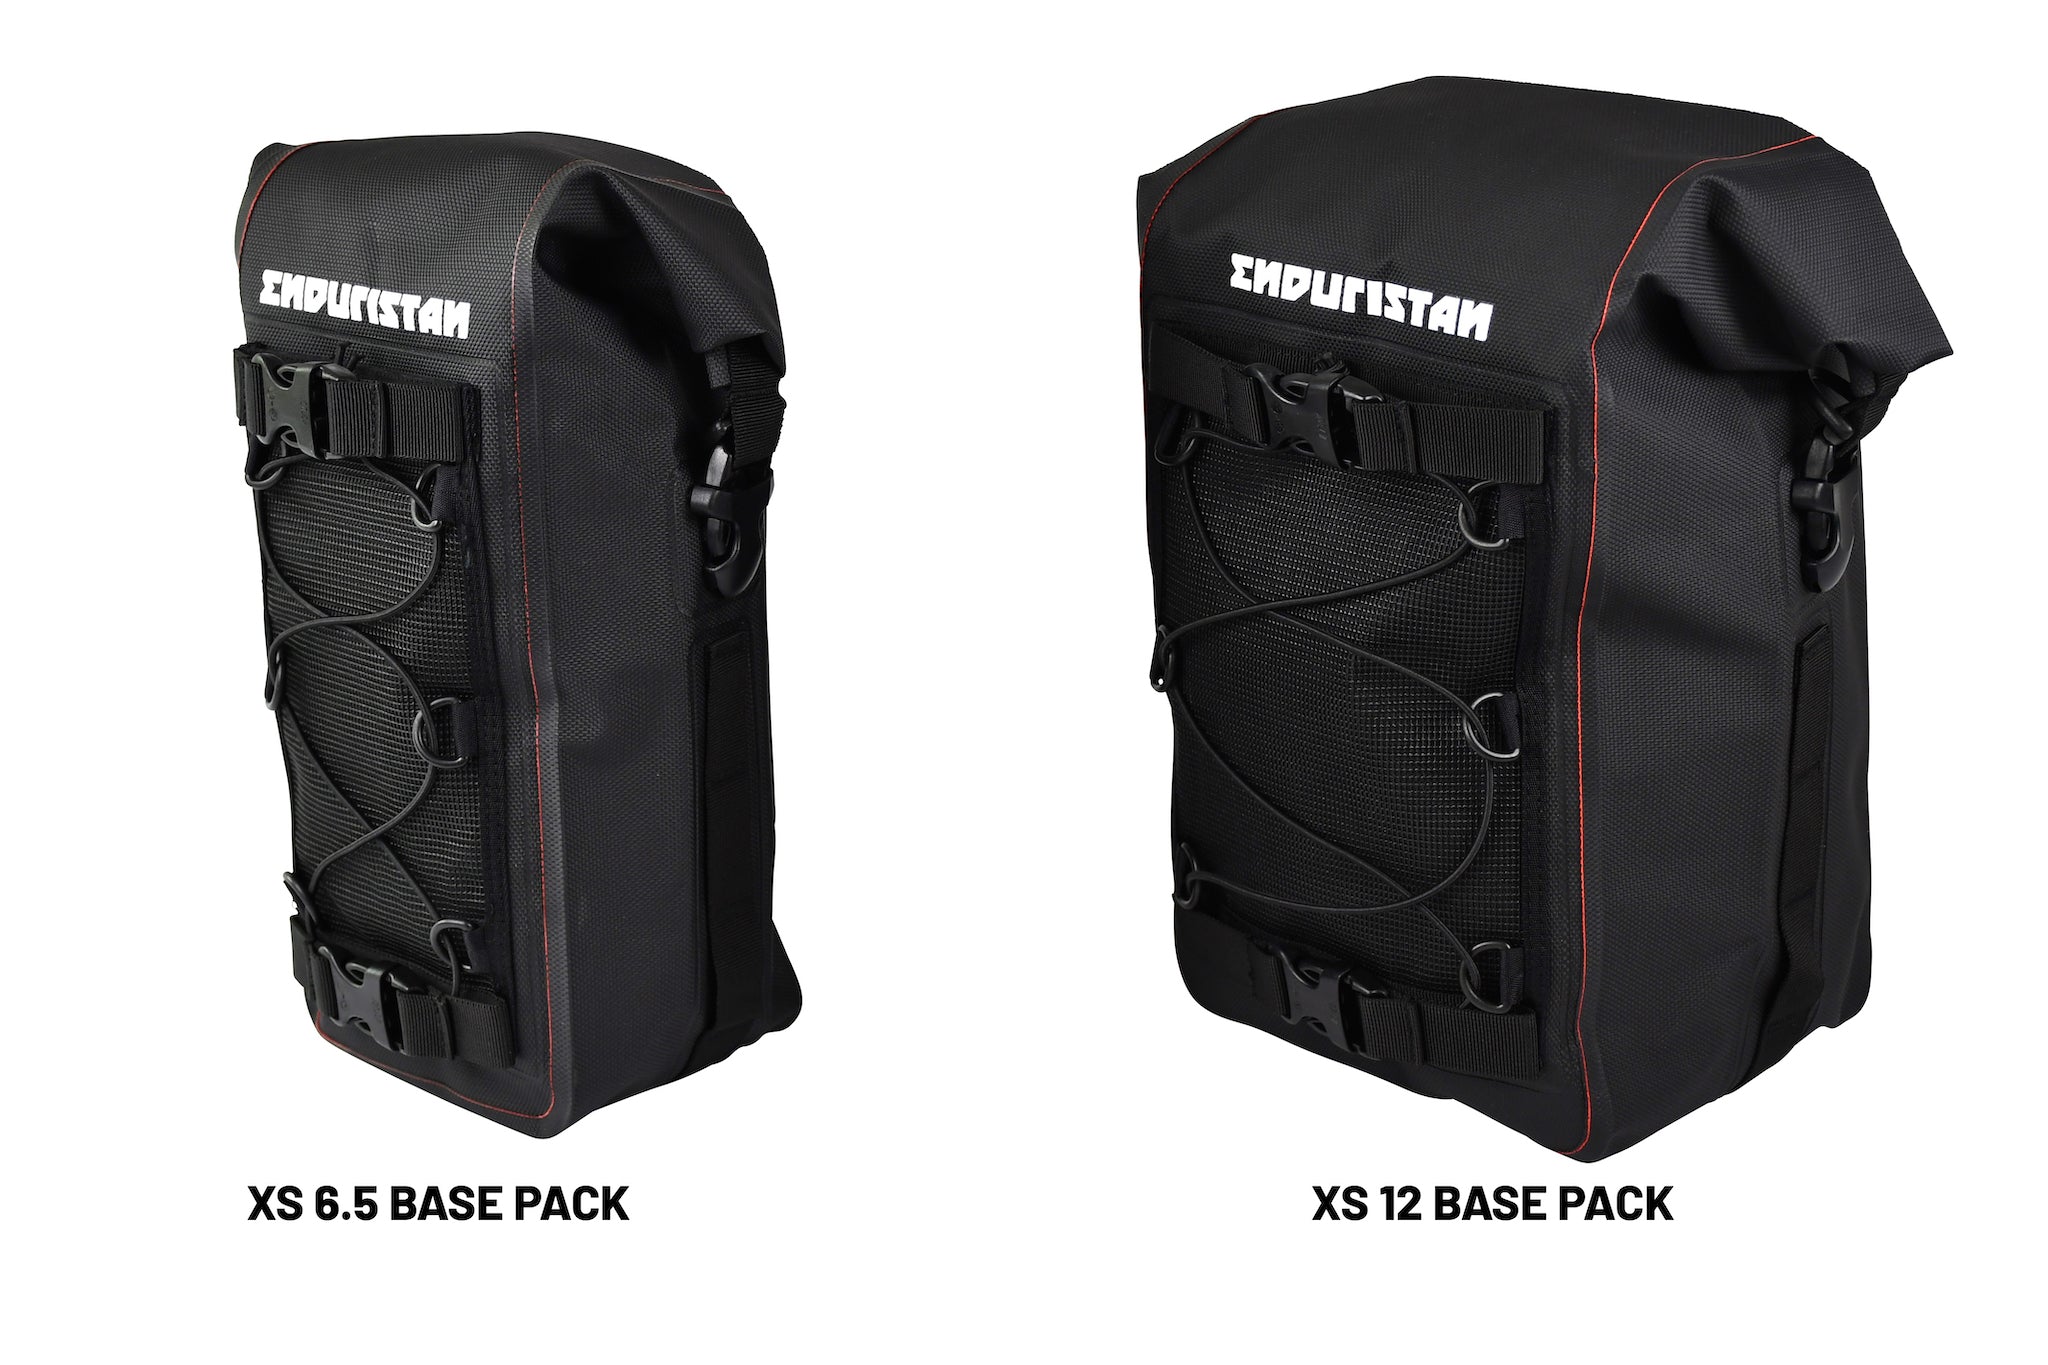 Packtasche XS 12 Base Pack